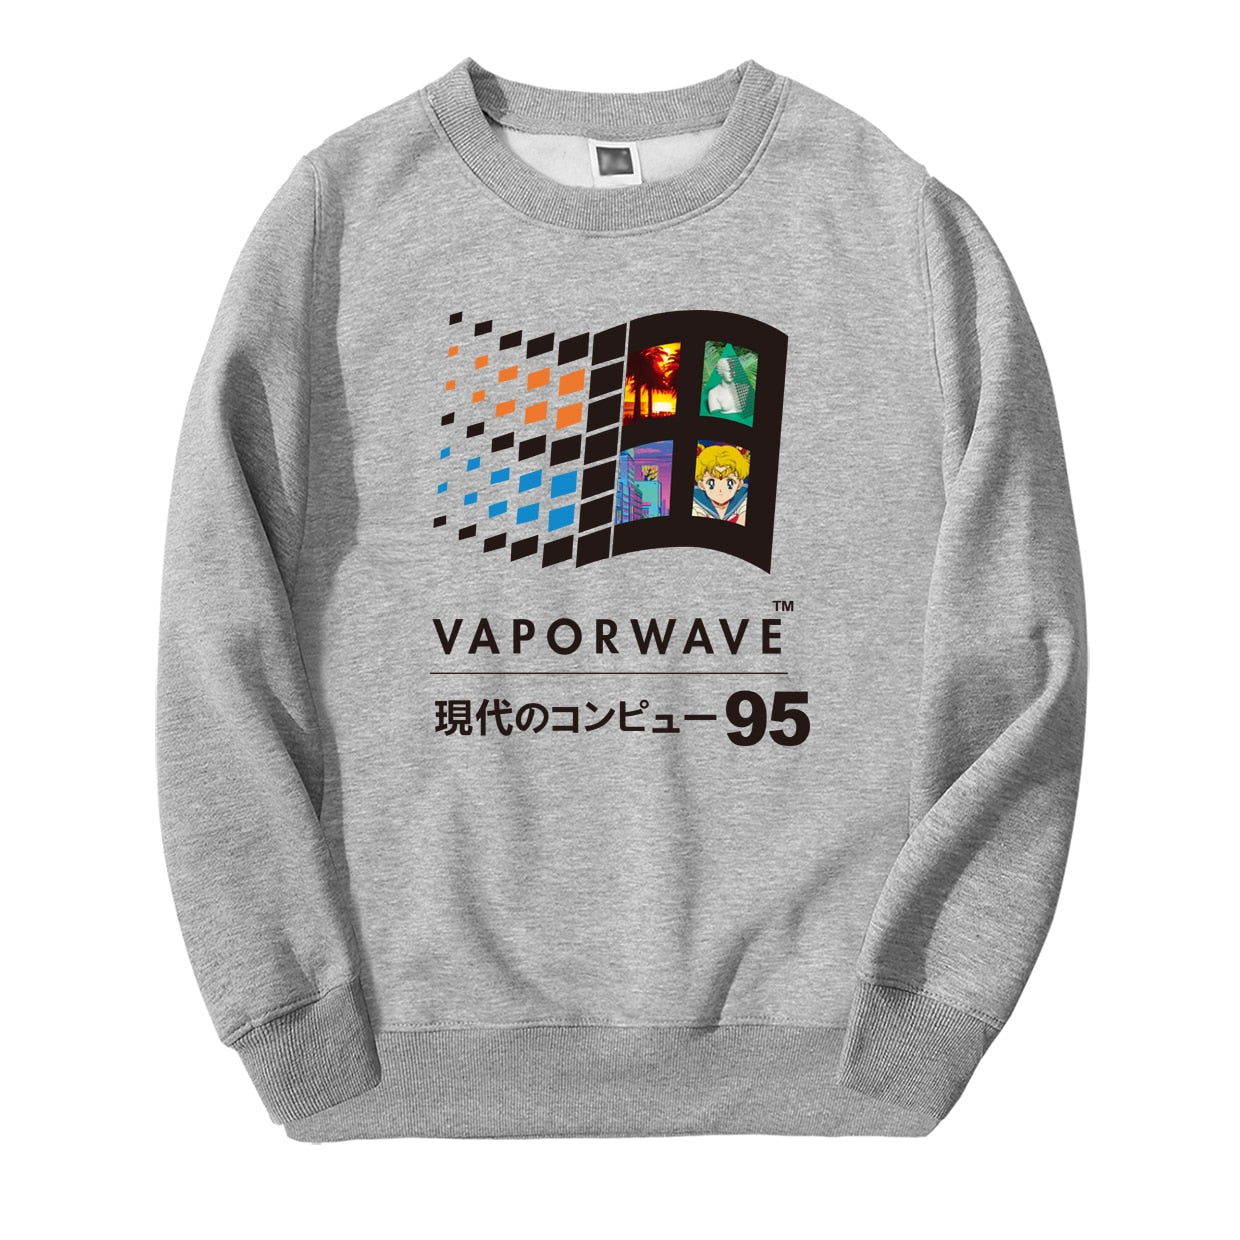 Aesthetic Vaporwave Vintage Retro Sweatshirt - SWEATSHIRT